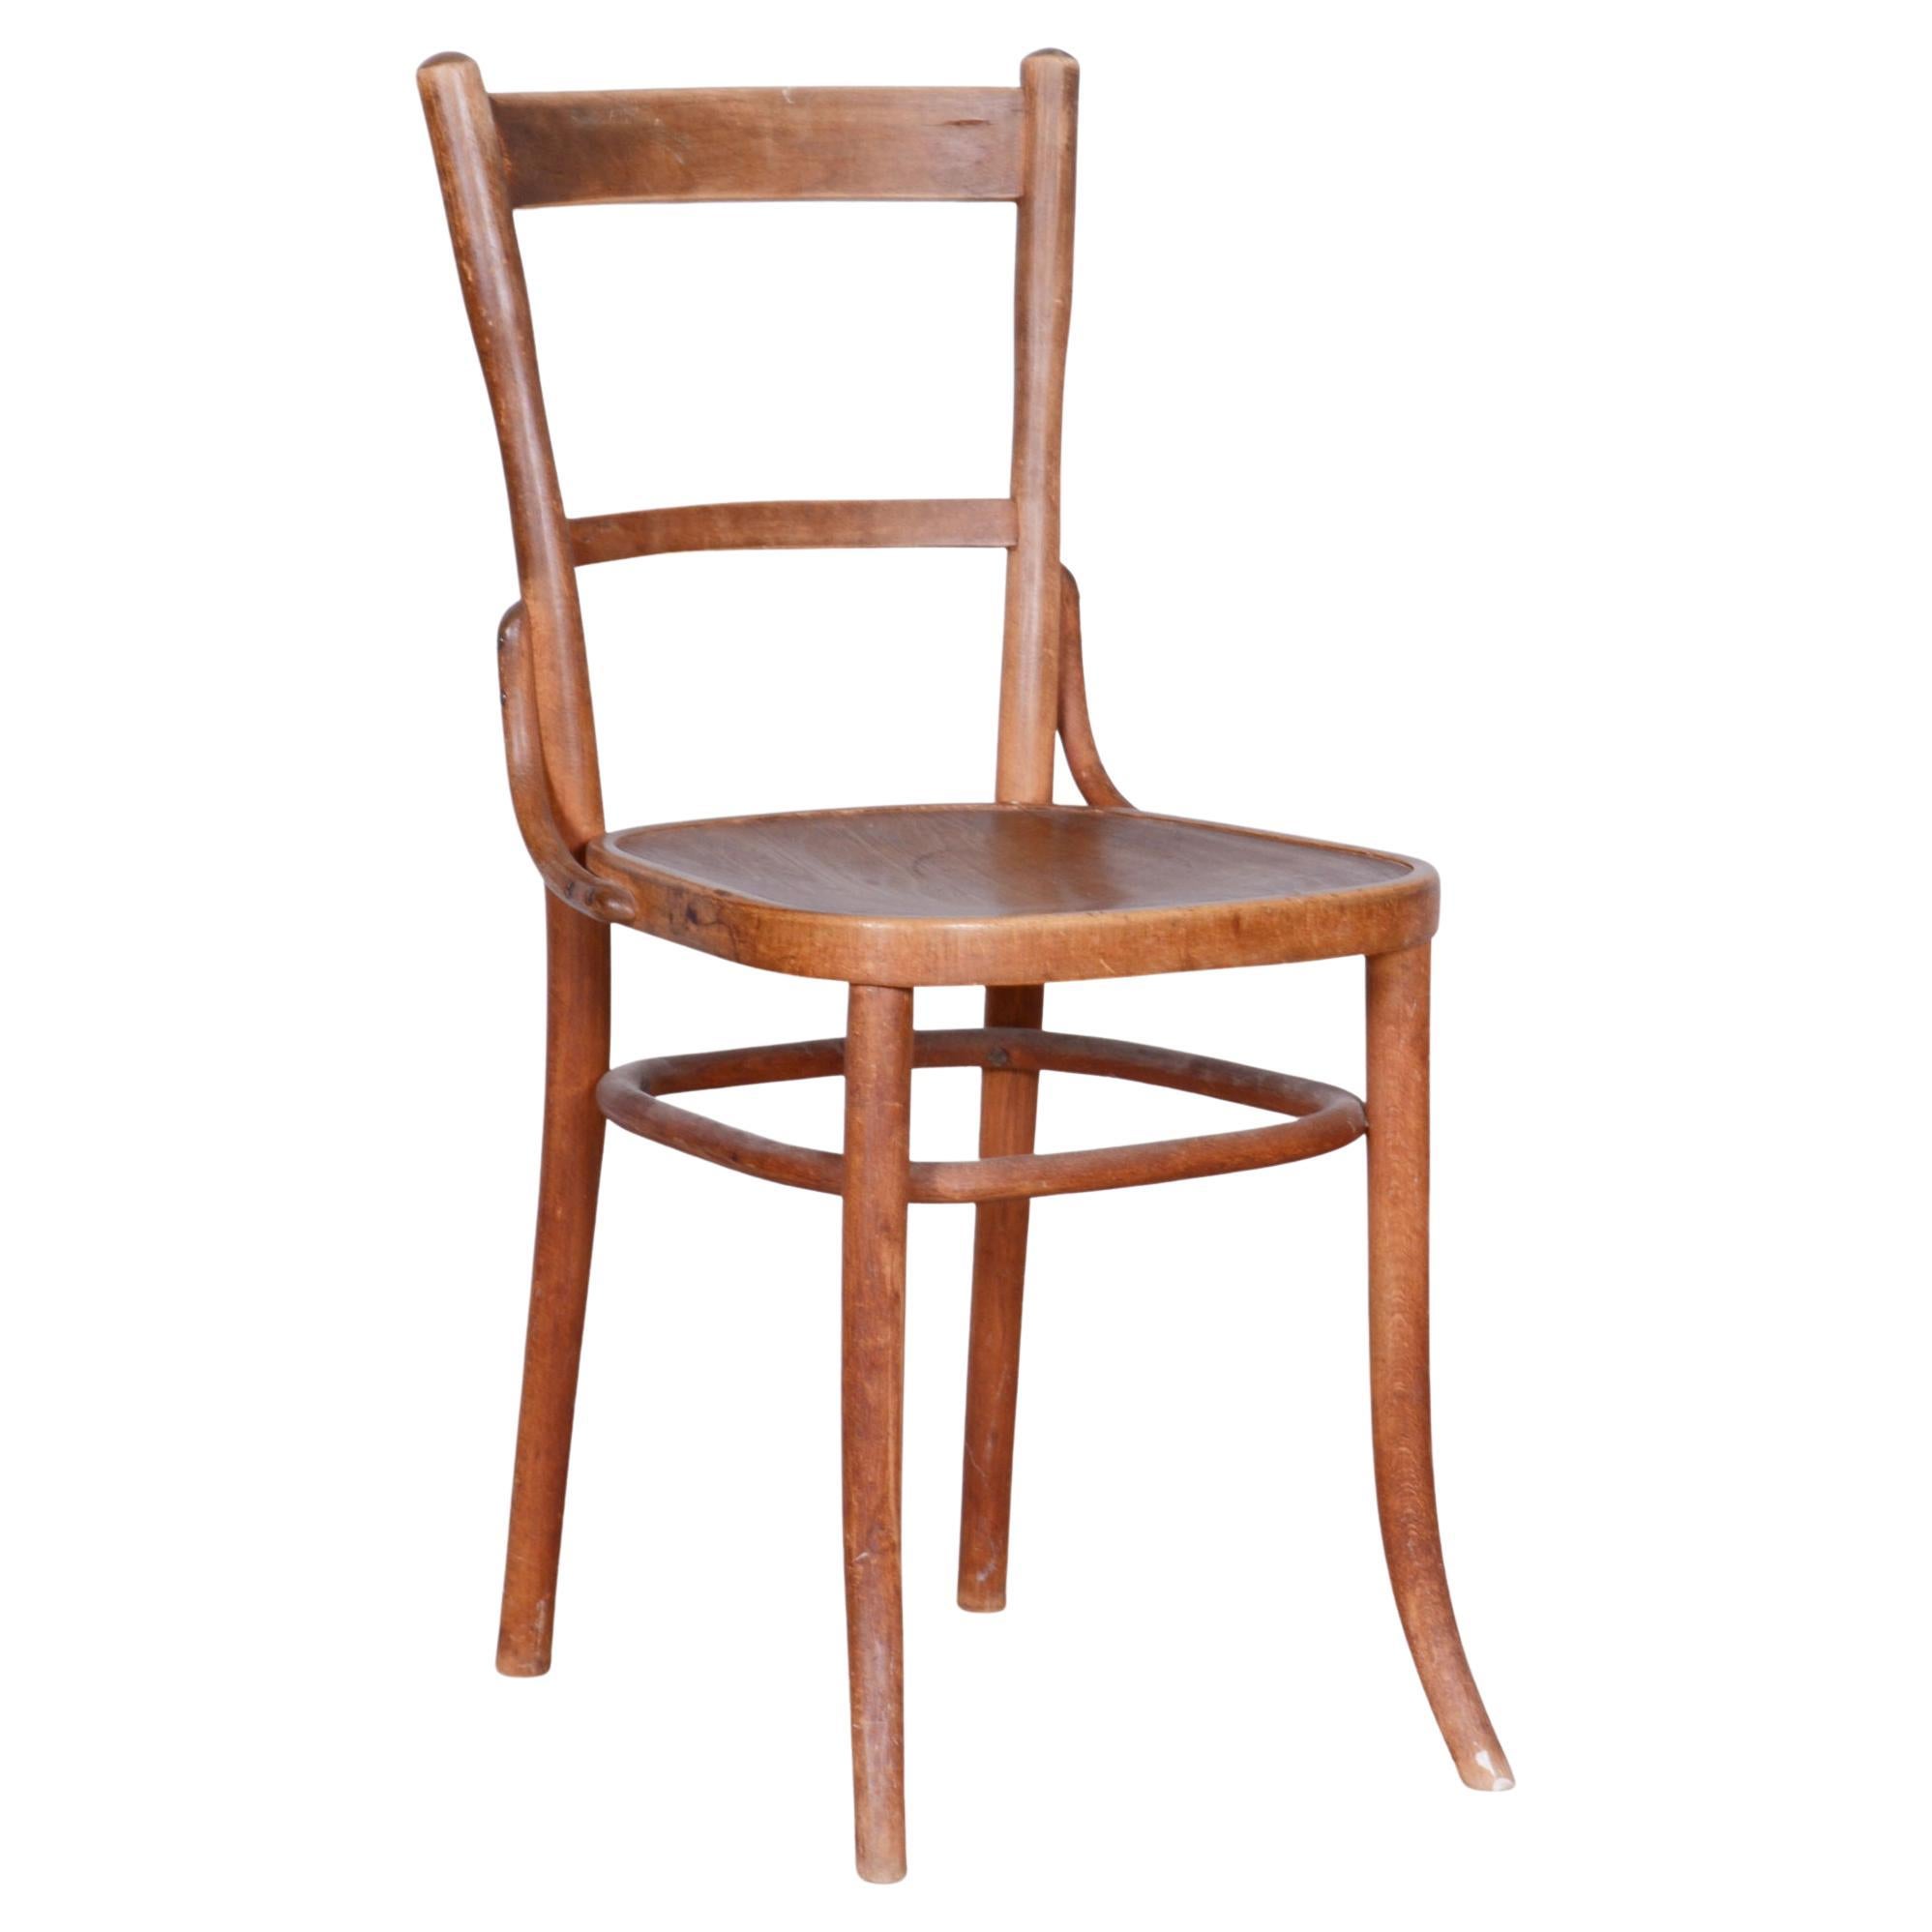 Original Art Deco Beech Chair, Fischel, Stable Construction, Czechia, 1920s For Sale